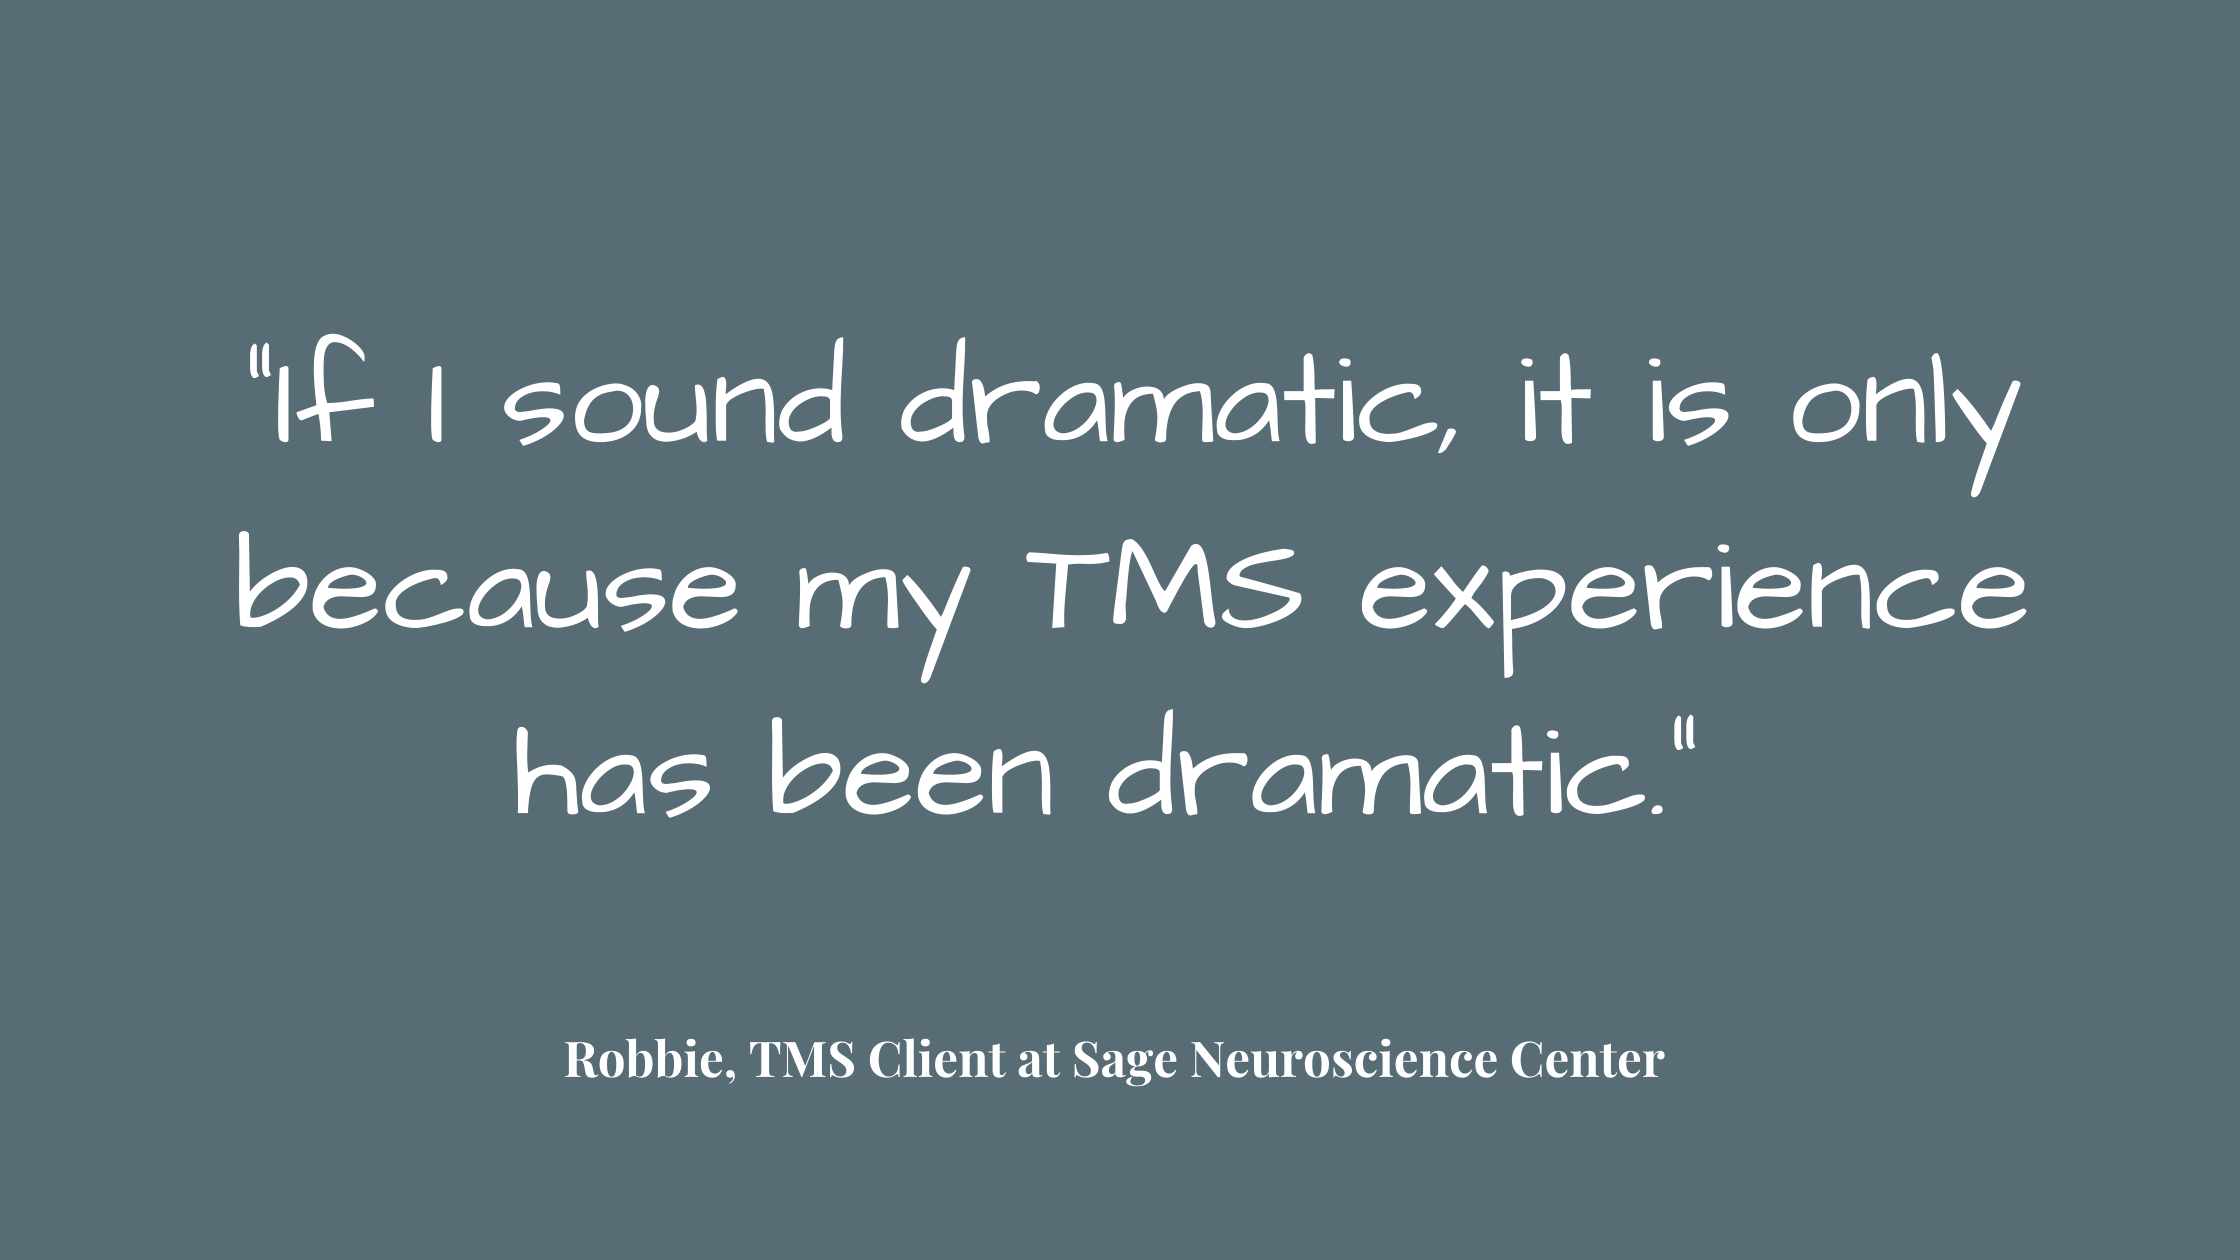 Robbie, TMS Client at Sage Neuroscience Center 